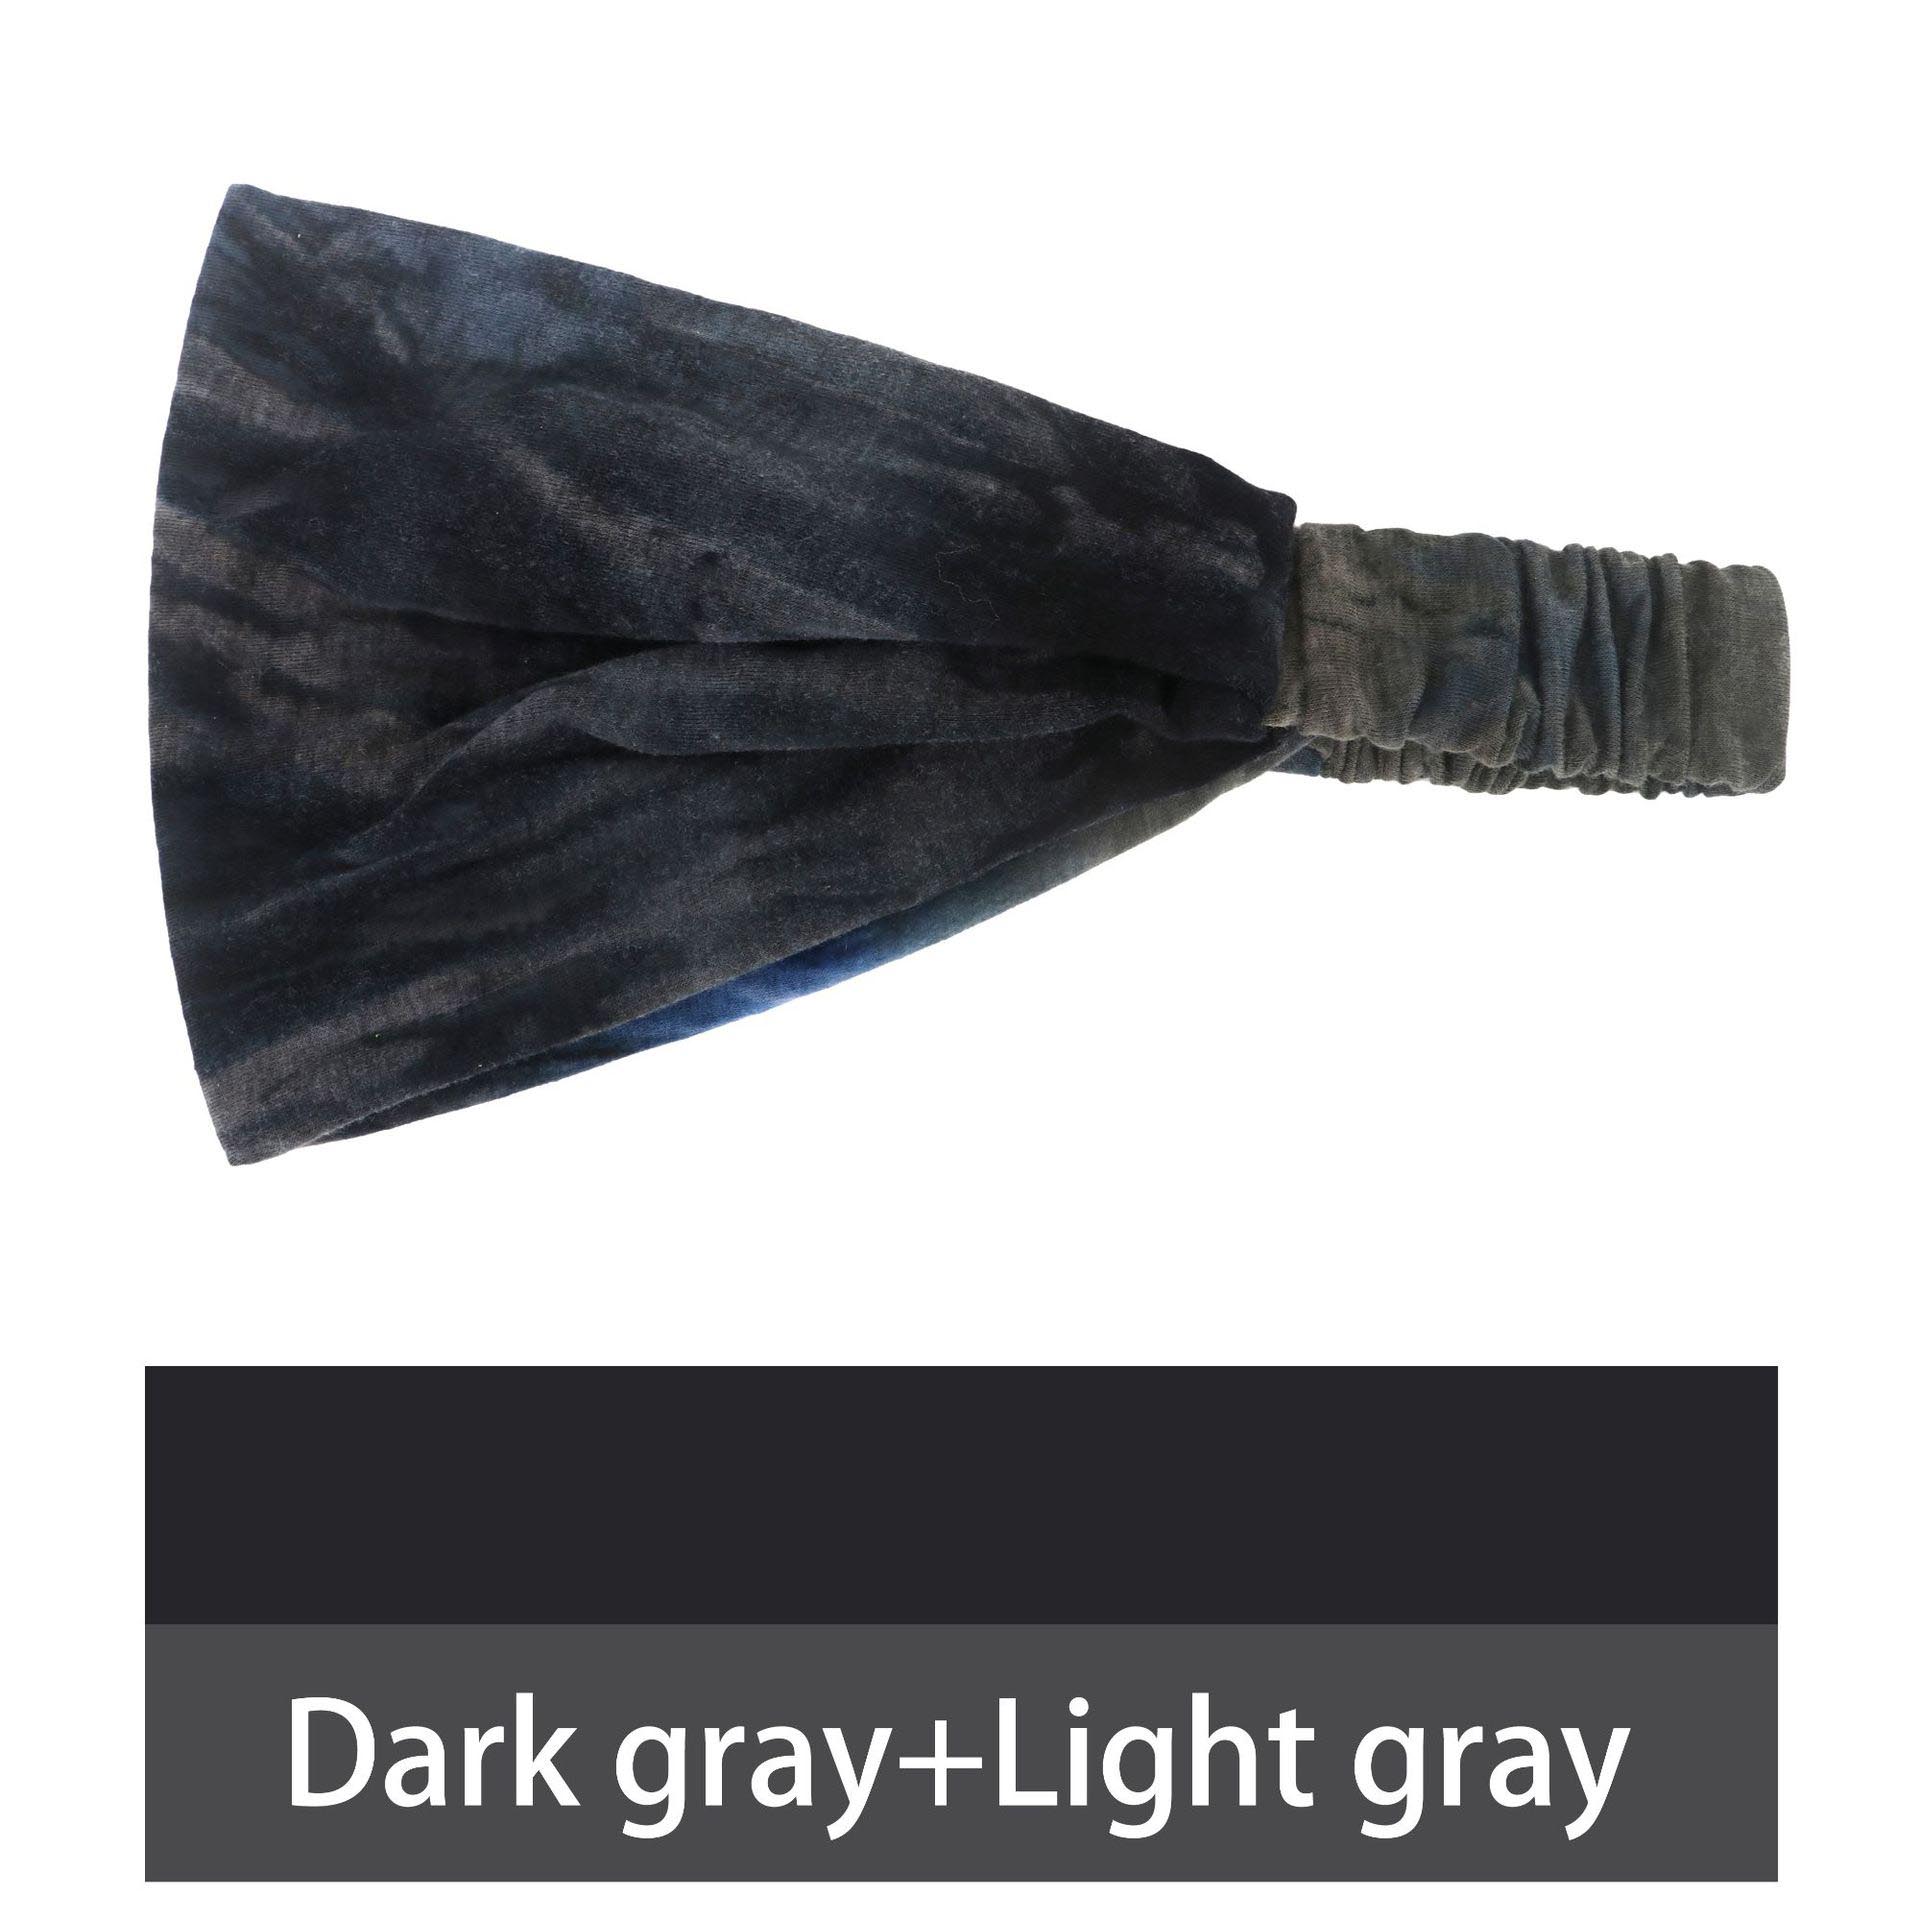 Dark grey and light grey